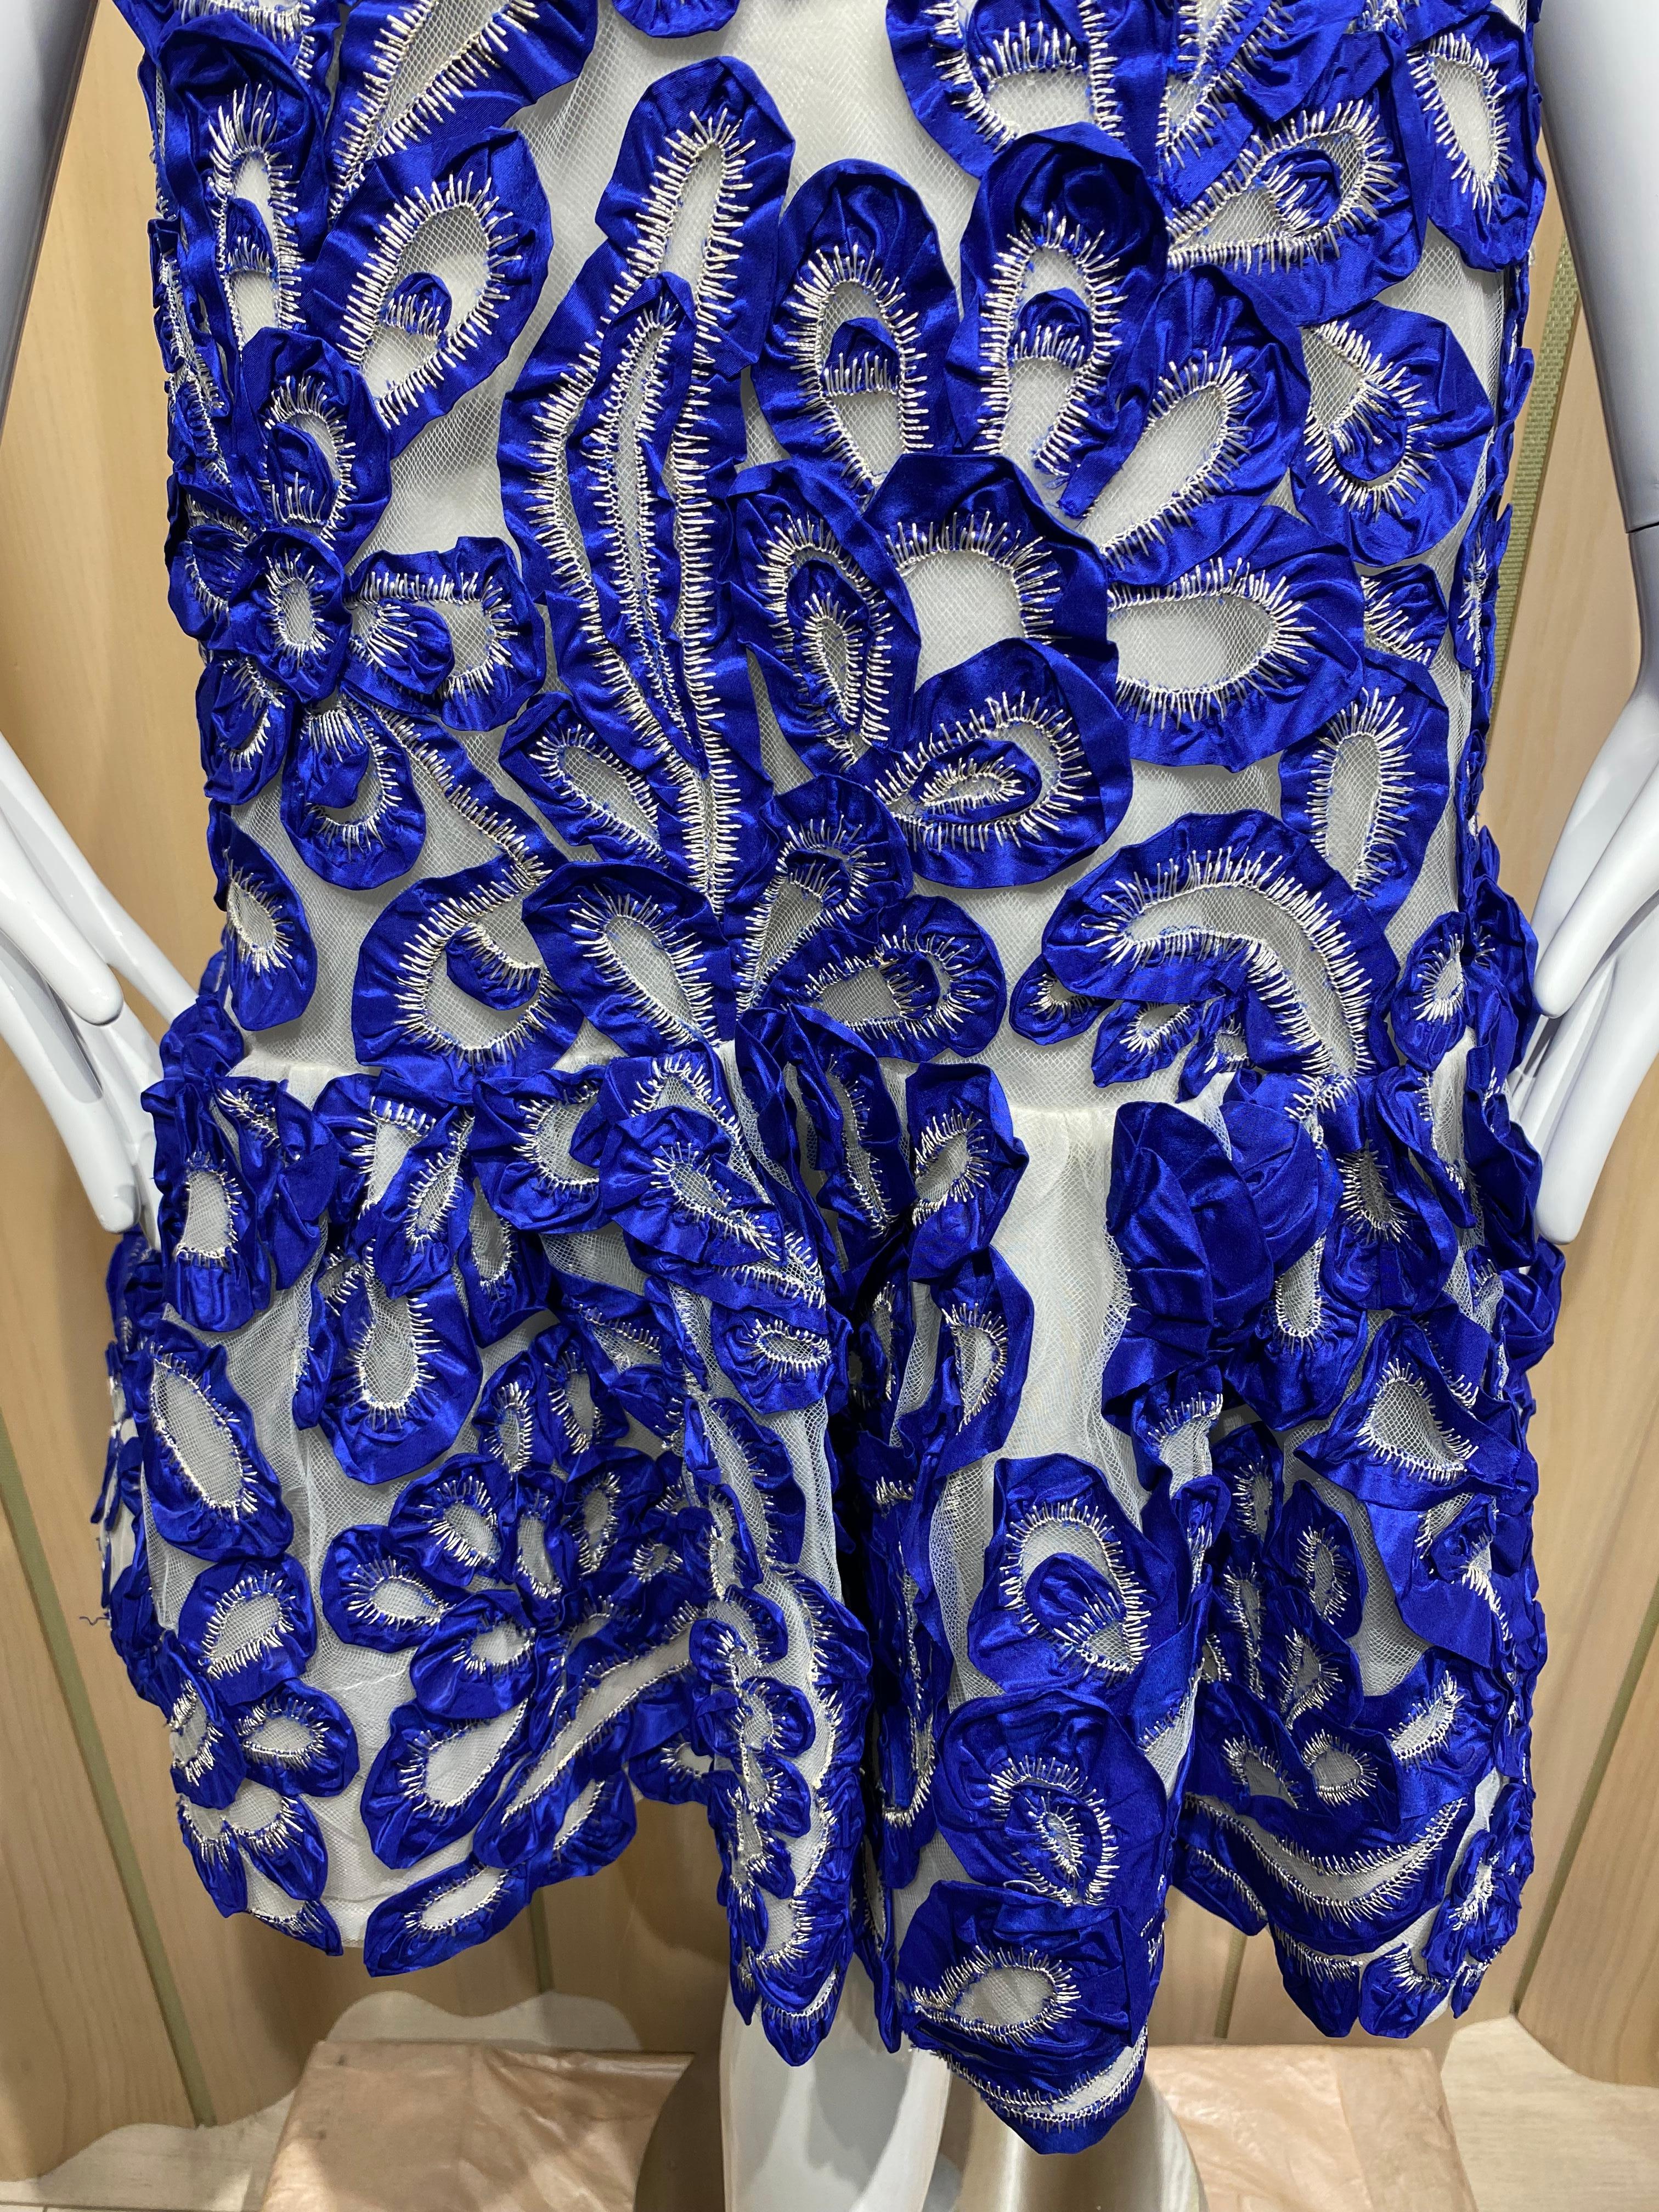 Oscar dela Renta Blue Sleeveless Cocktail Dress  For Sale 1